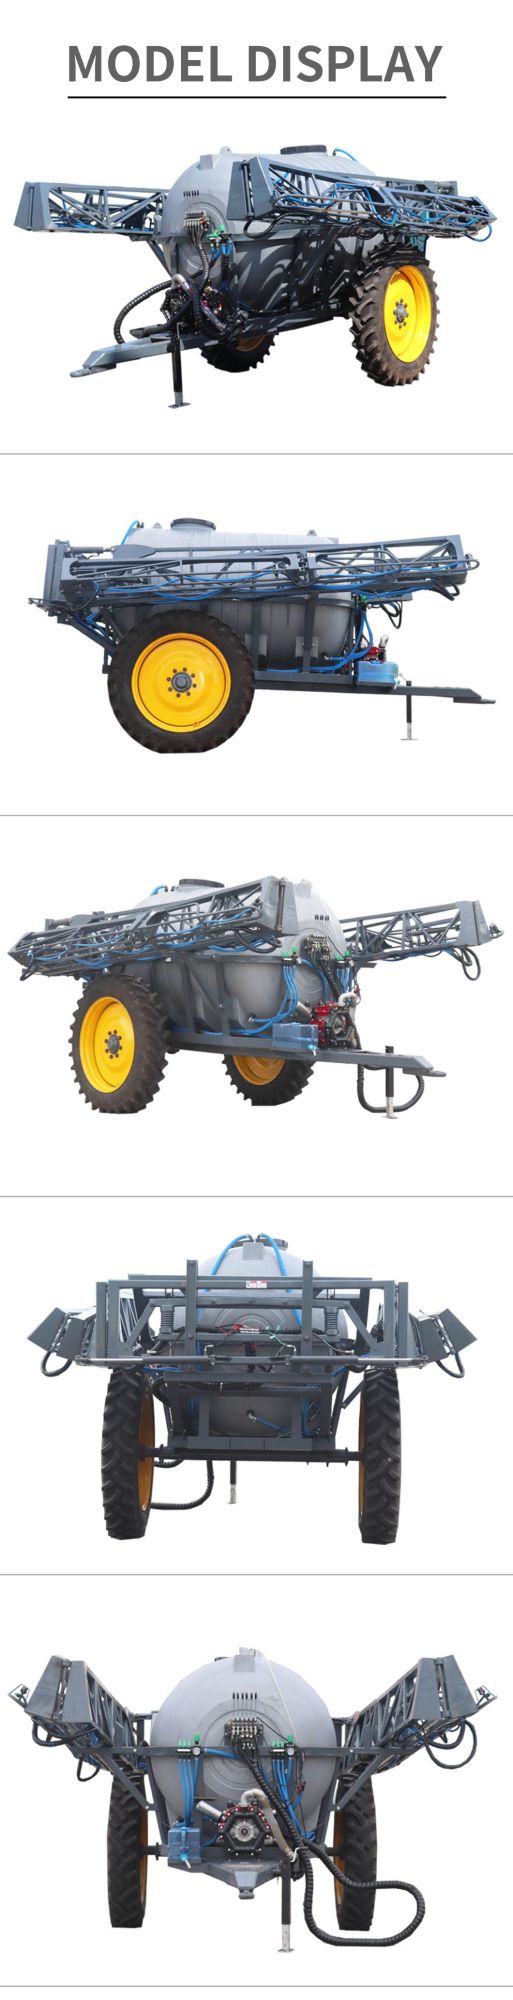 Agricultural Farm Wheat Tractor Power Self Propelled Bean Wheel 4WD Boom Sprayer